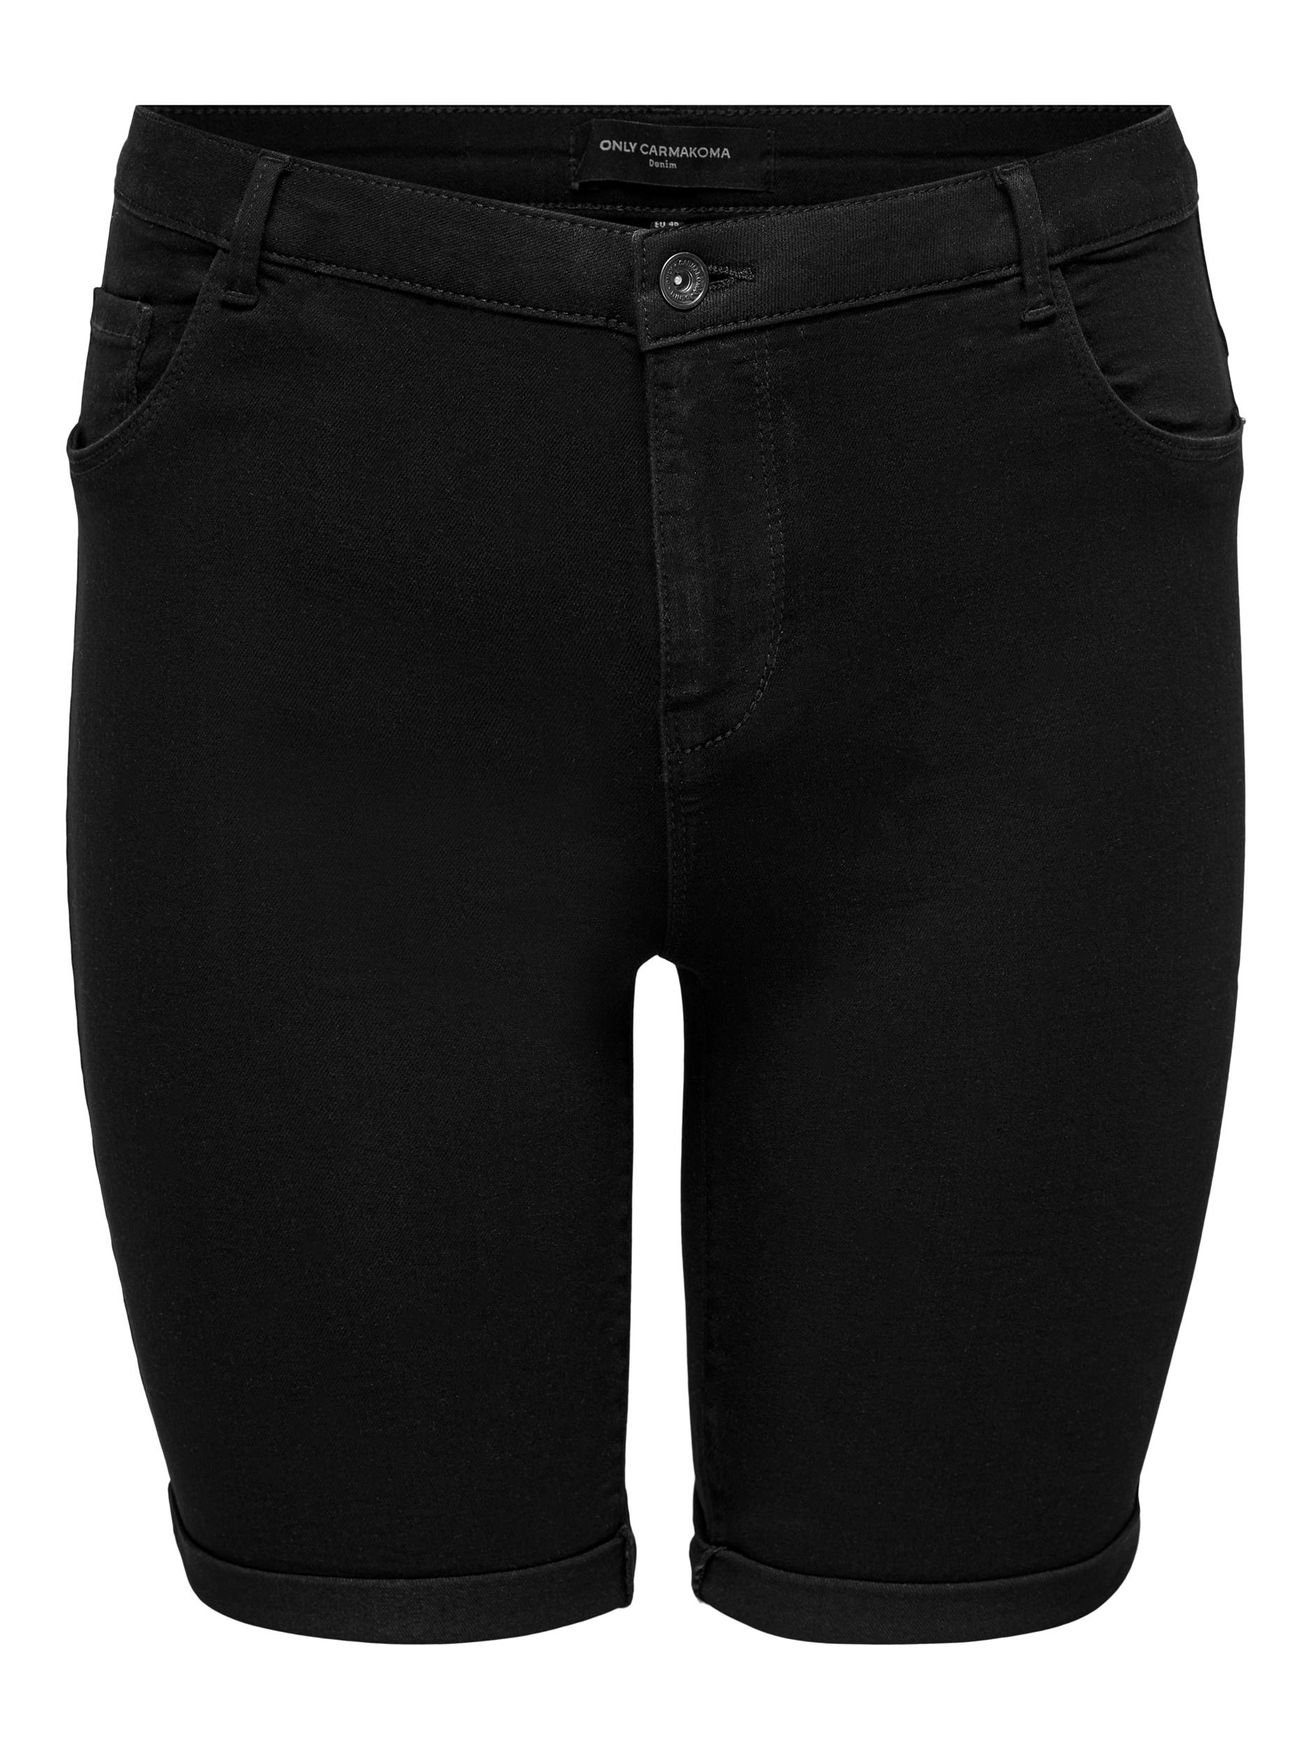 ONLY CARMAKOMA Jeansshorts Plus Size Denim Jeans Shorts Kurze Stretch Bermuda Hose CARTHUNDER 4956 in Schwarz